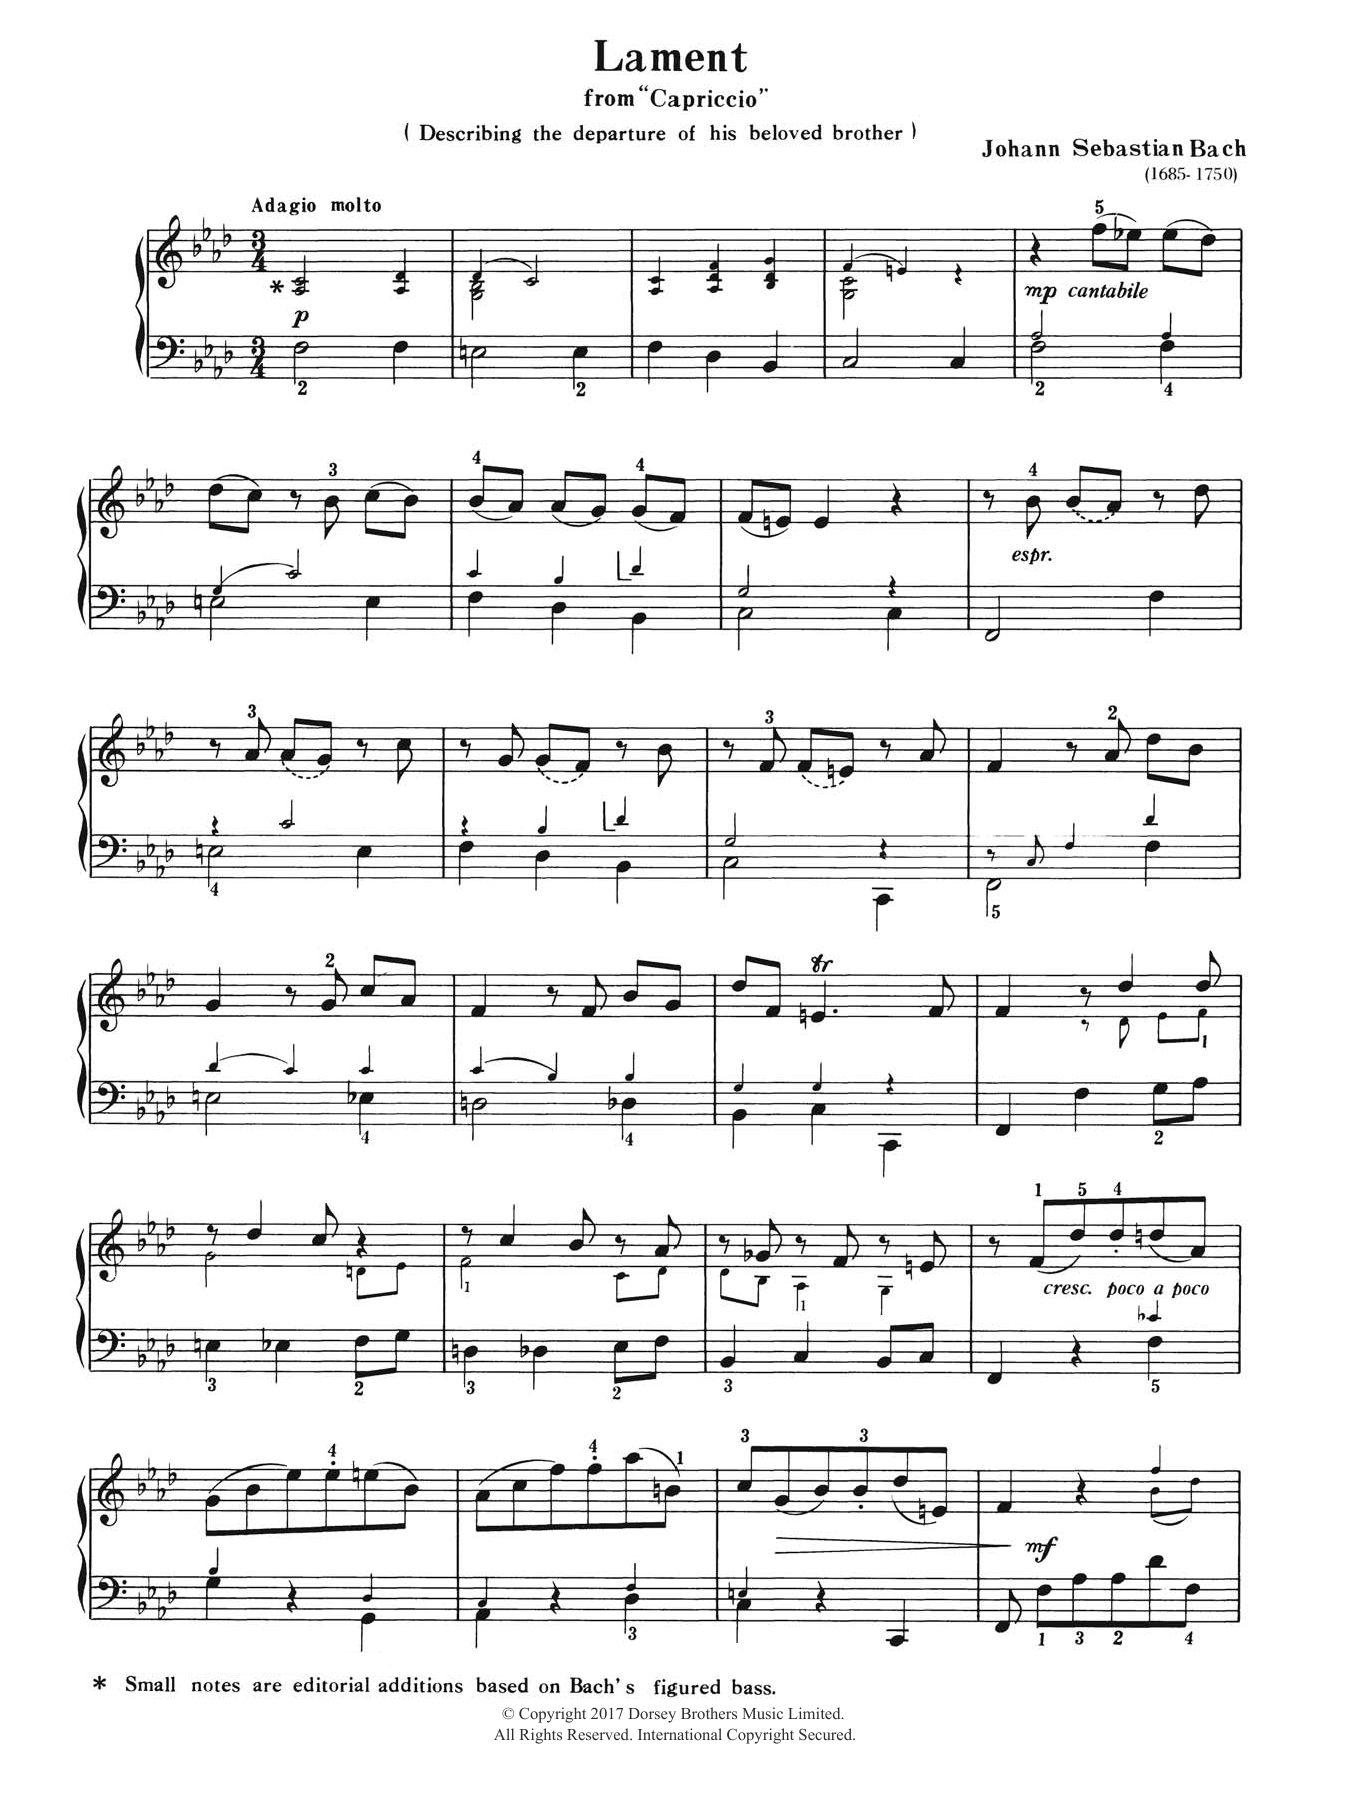 Download Johann Sebastian Bach Lament (from Capriccio) Sheet Music